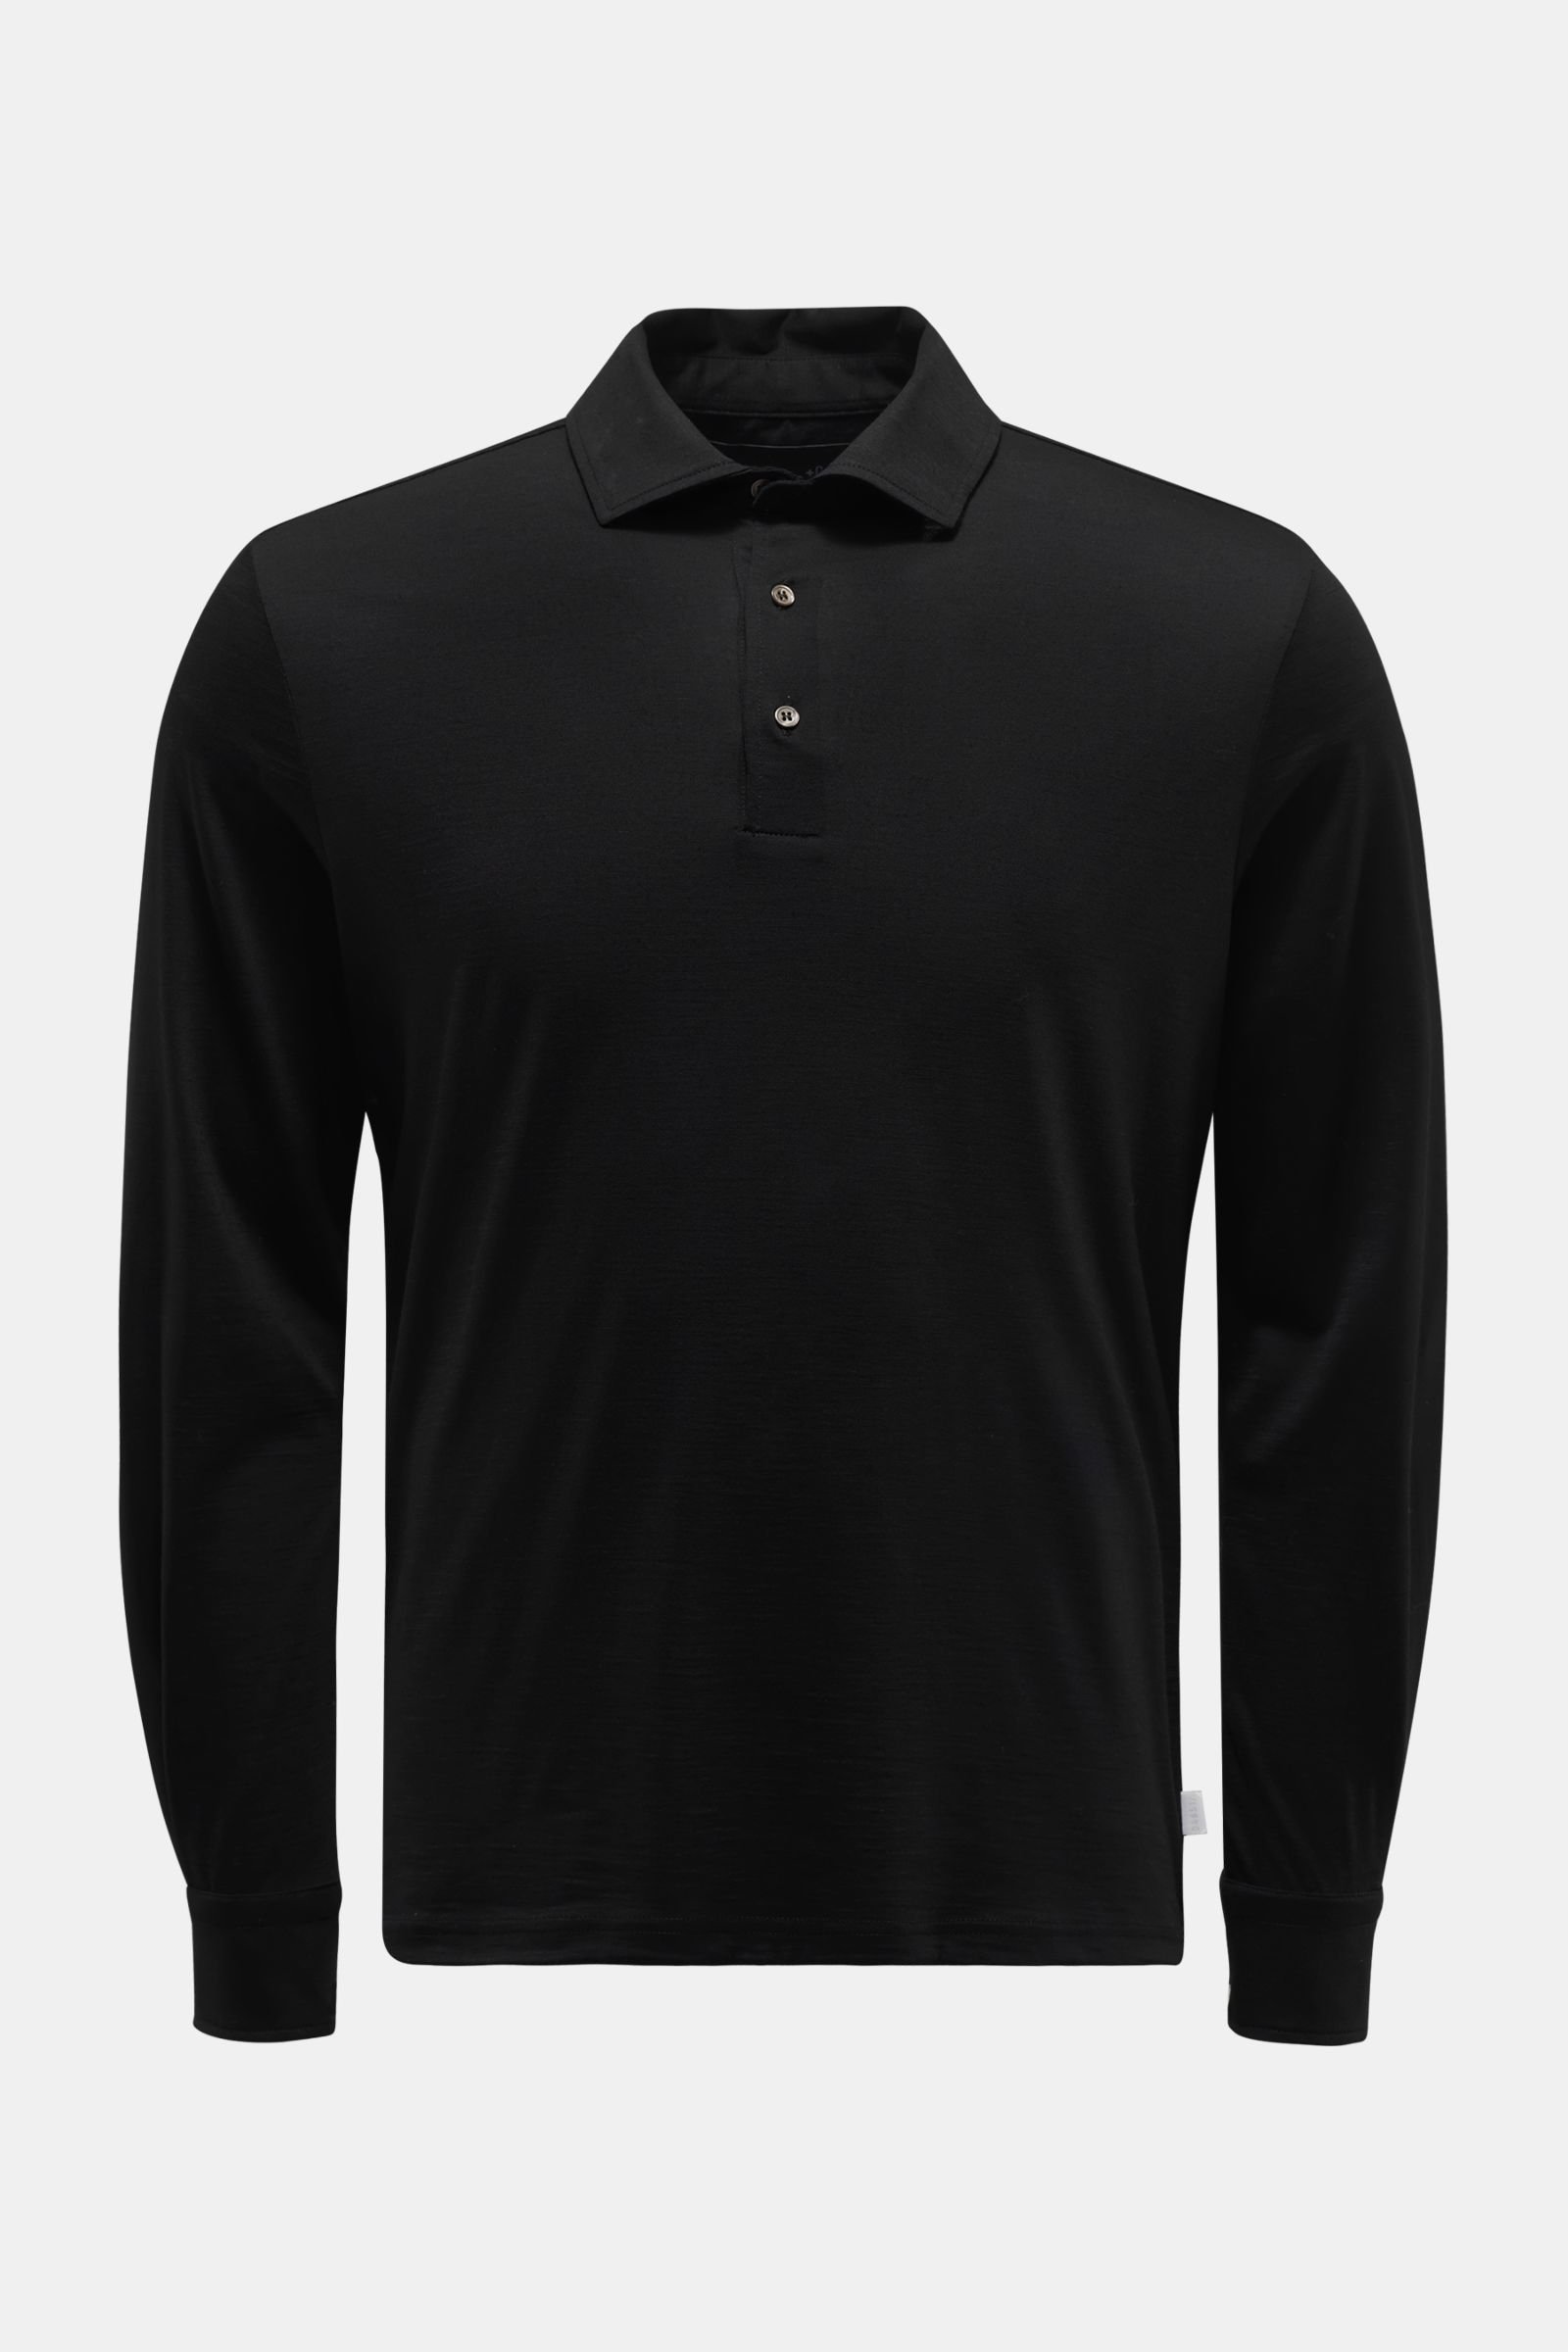 Merino long sleeve polo shirt 'The Merino Popover' black